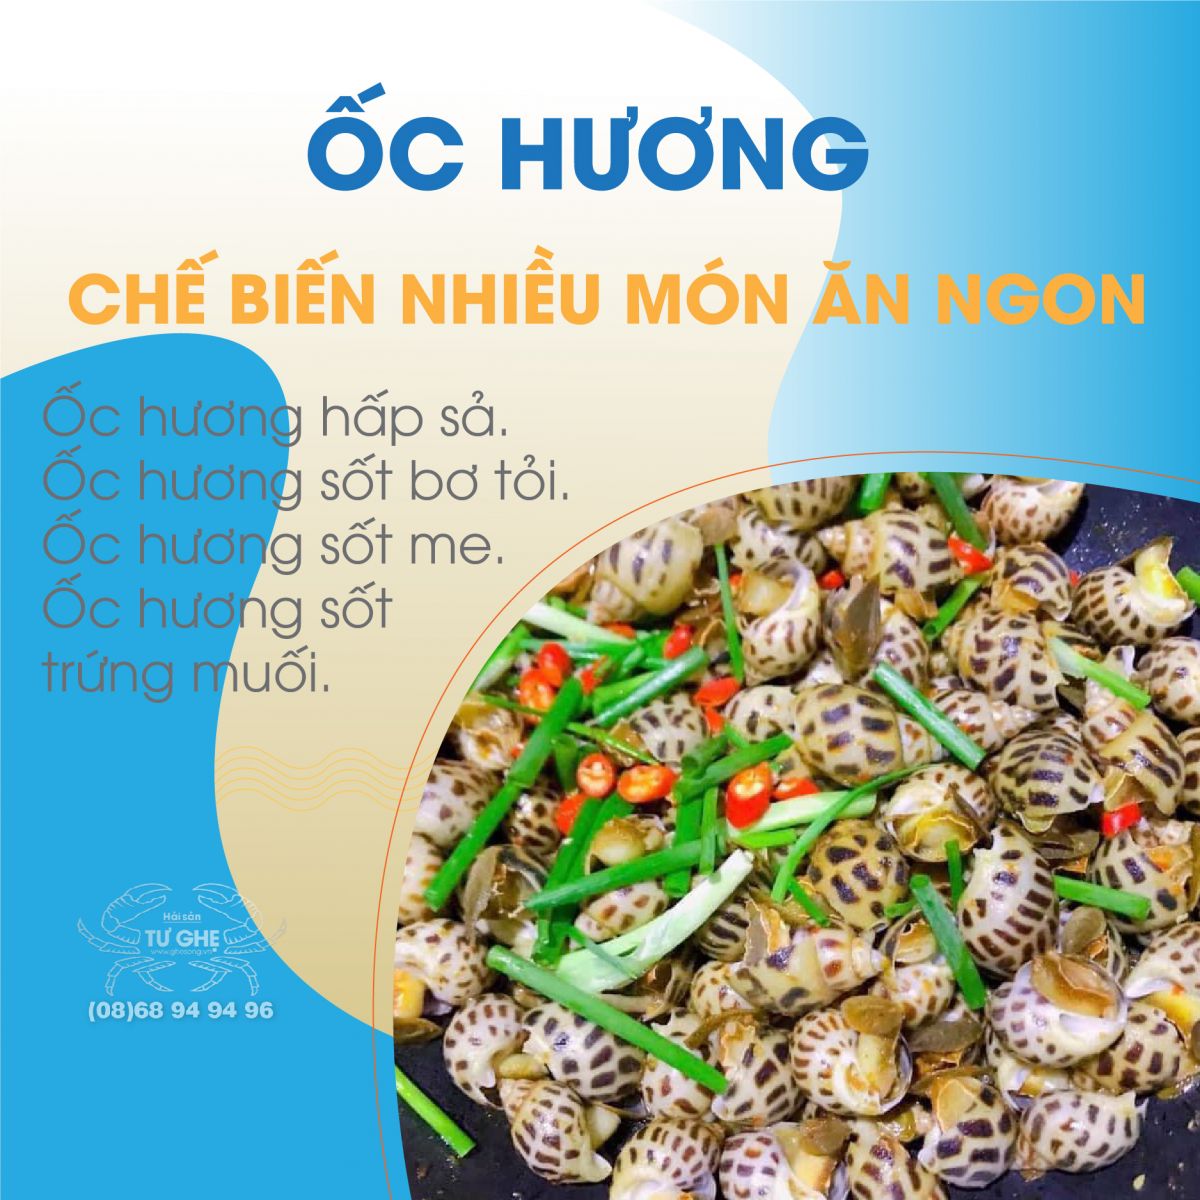 oc-huong-che-bien-mon-an-ngon